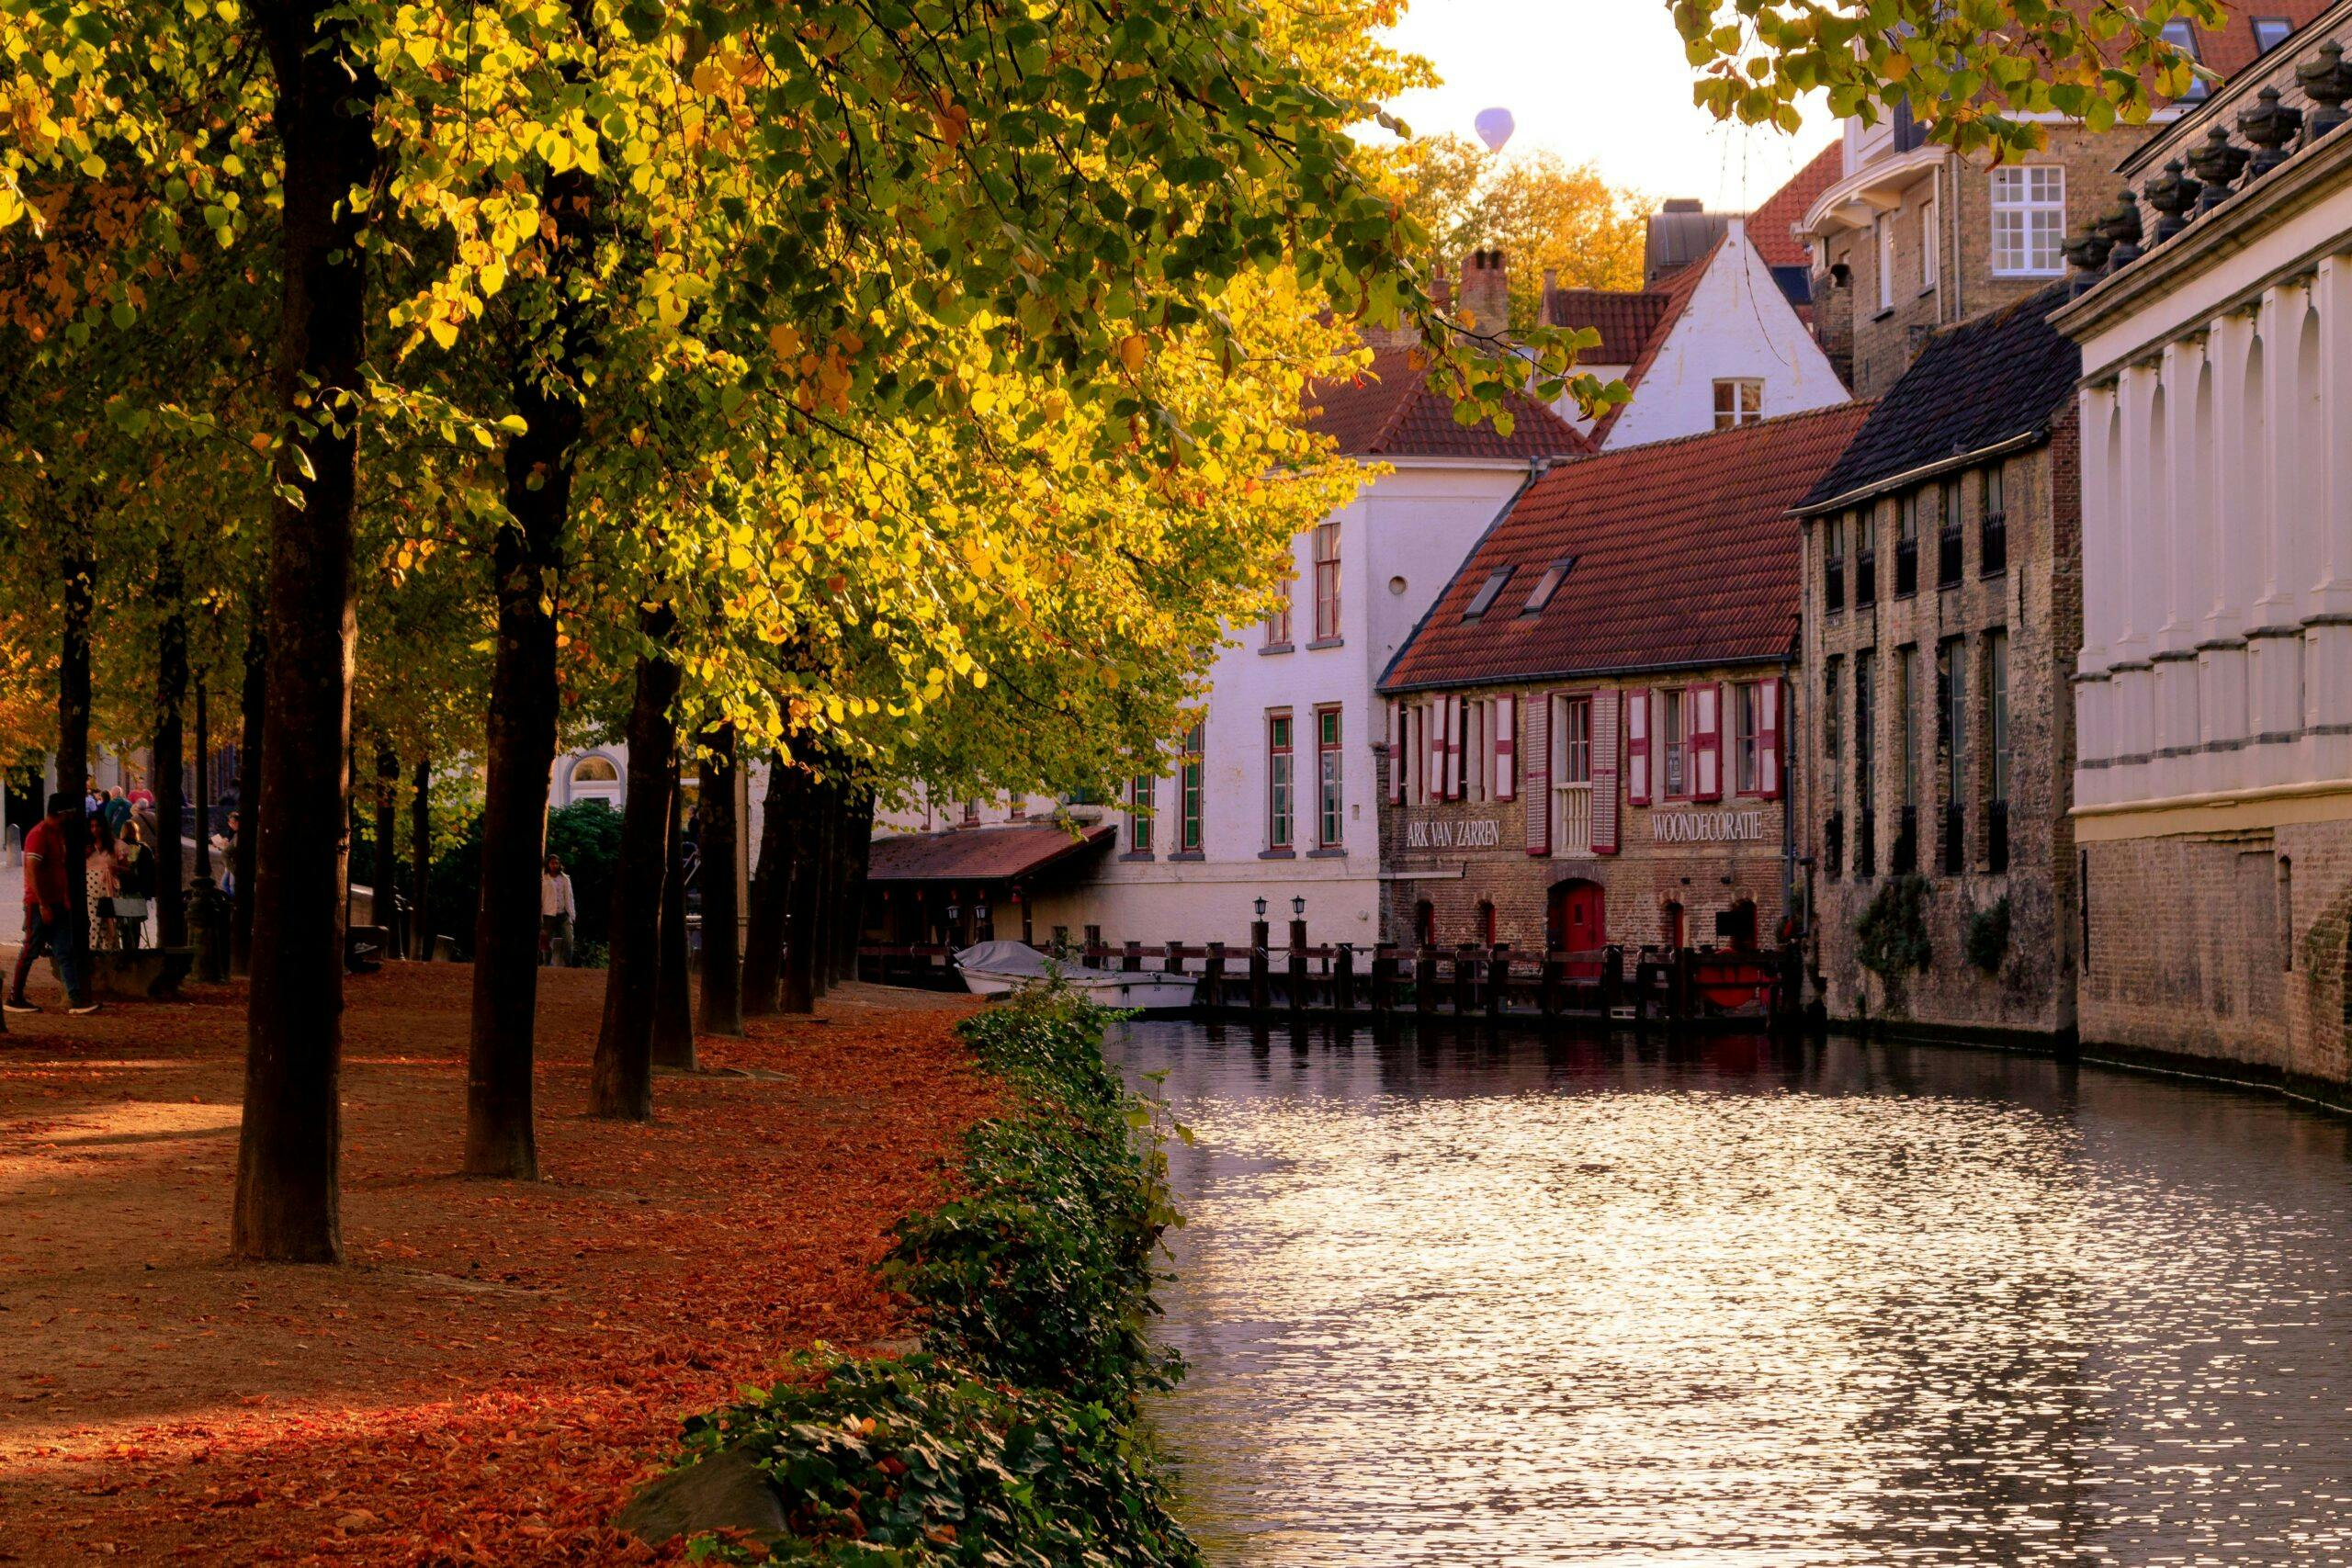 We're reimagining a fairer way to visit Belgium